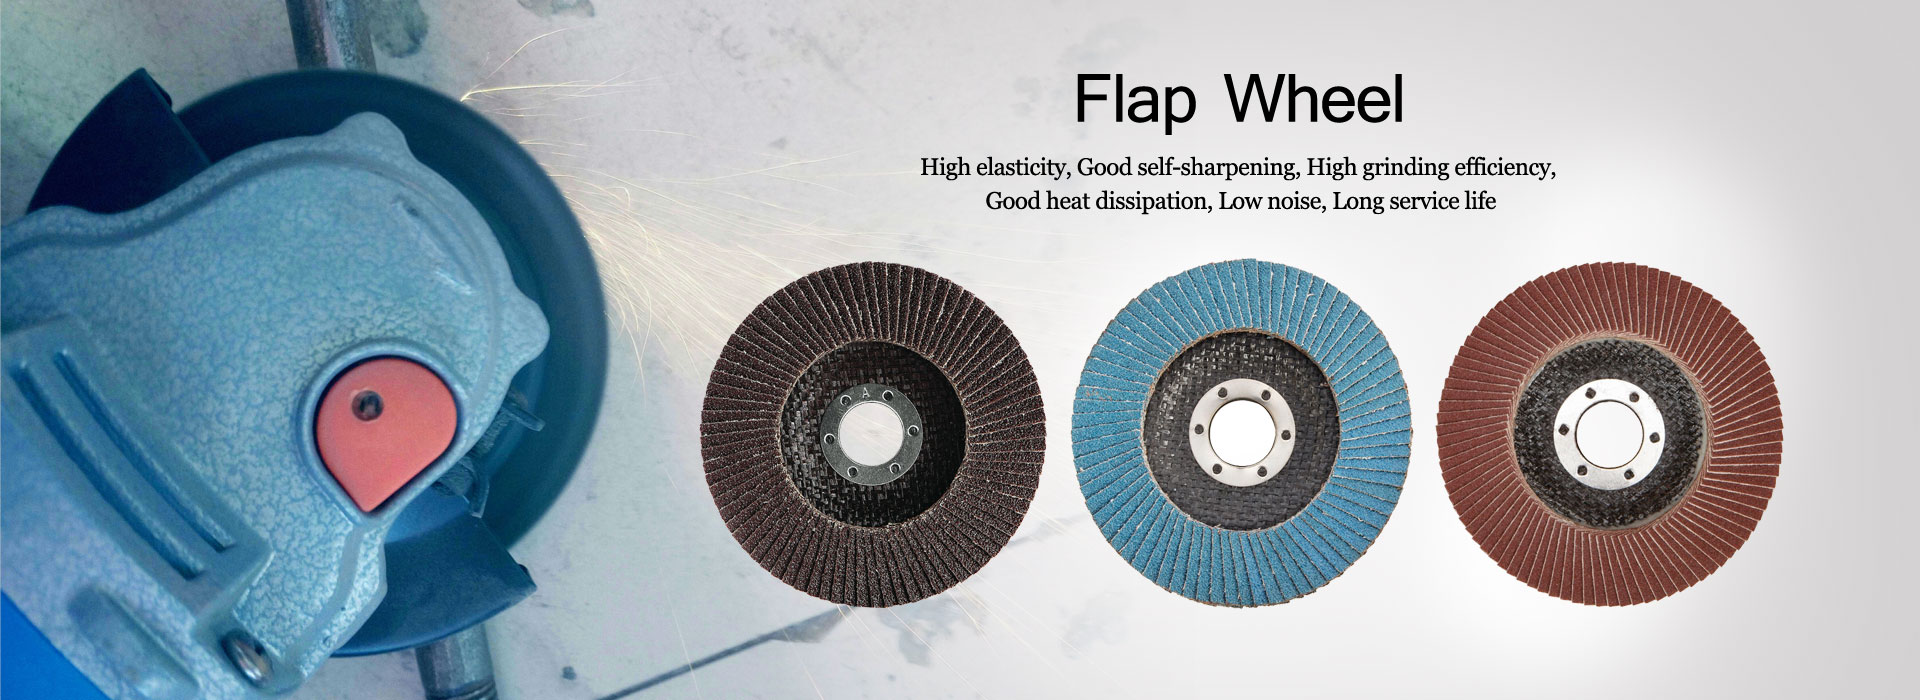 Flap Wheel